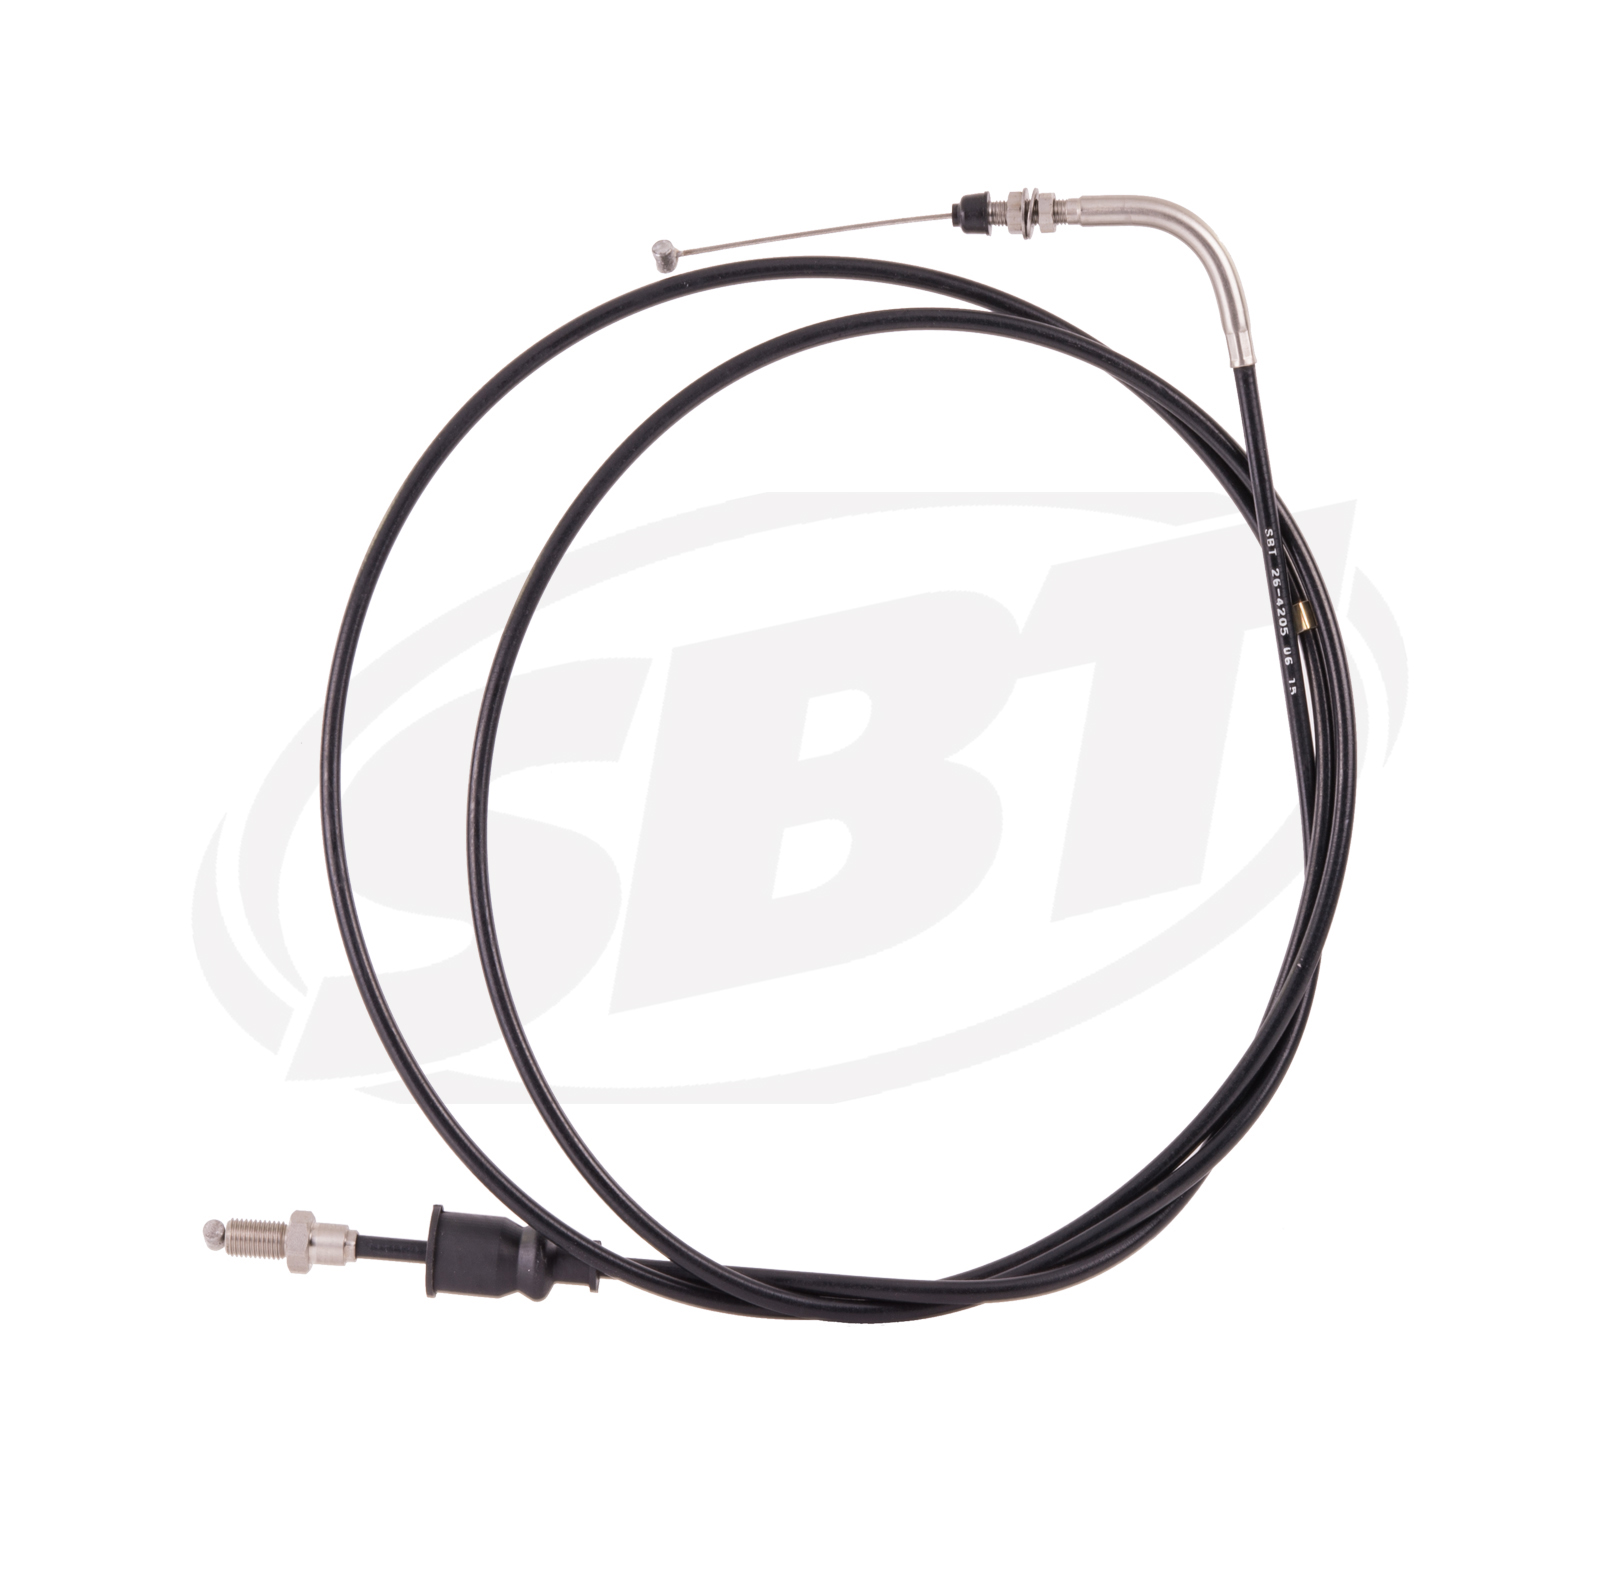 SBT Kawasaki Throttle Cable JS 550 54012-3705 1987 